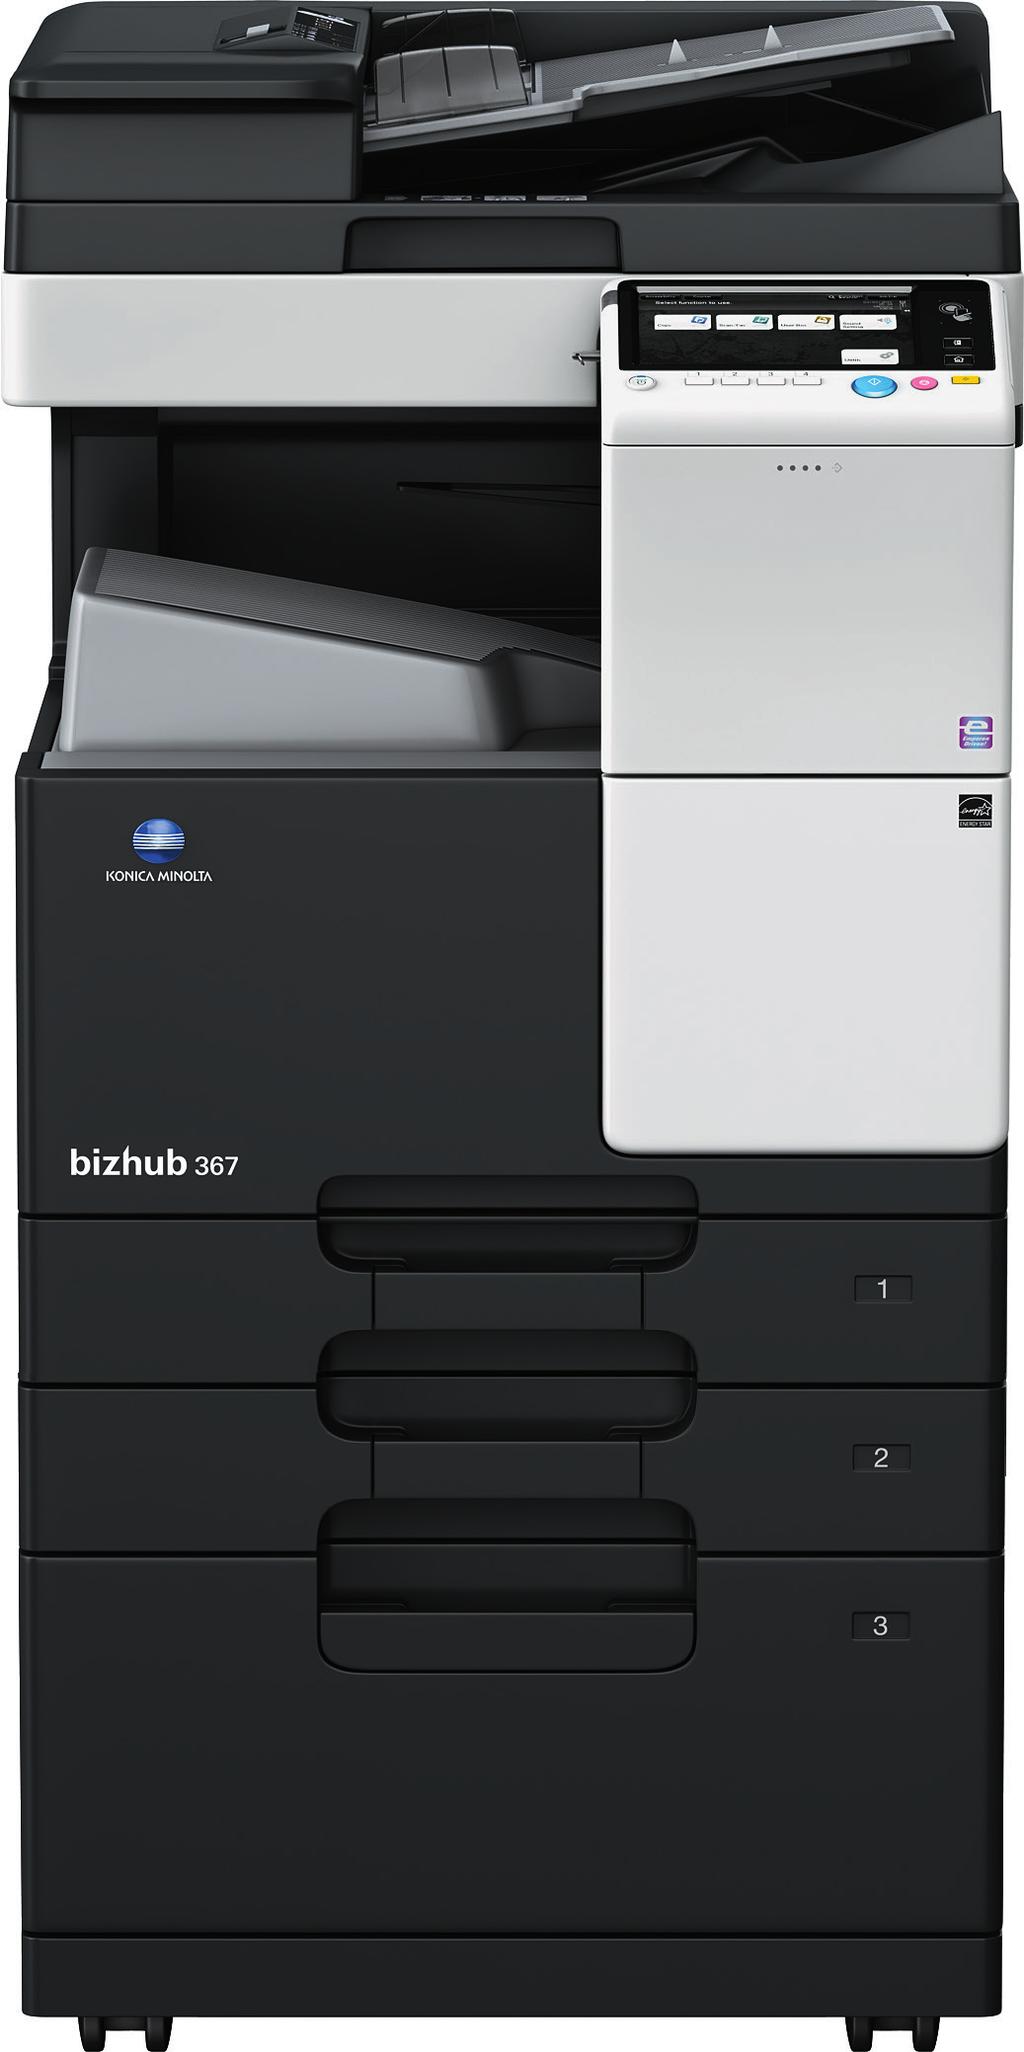 Bizhub 367 A789041 Copiadora - Impresora - Escaner a Full color COSTO POR COPIA Bizhub 367 Descripcion Duracion Precio $ Total Toner TN323 23000 100.